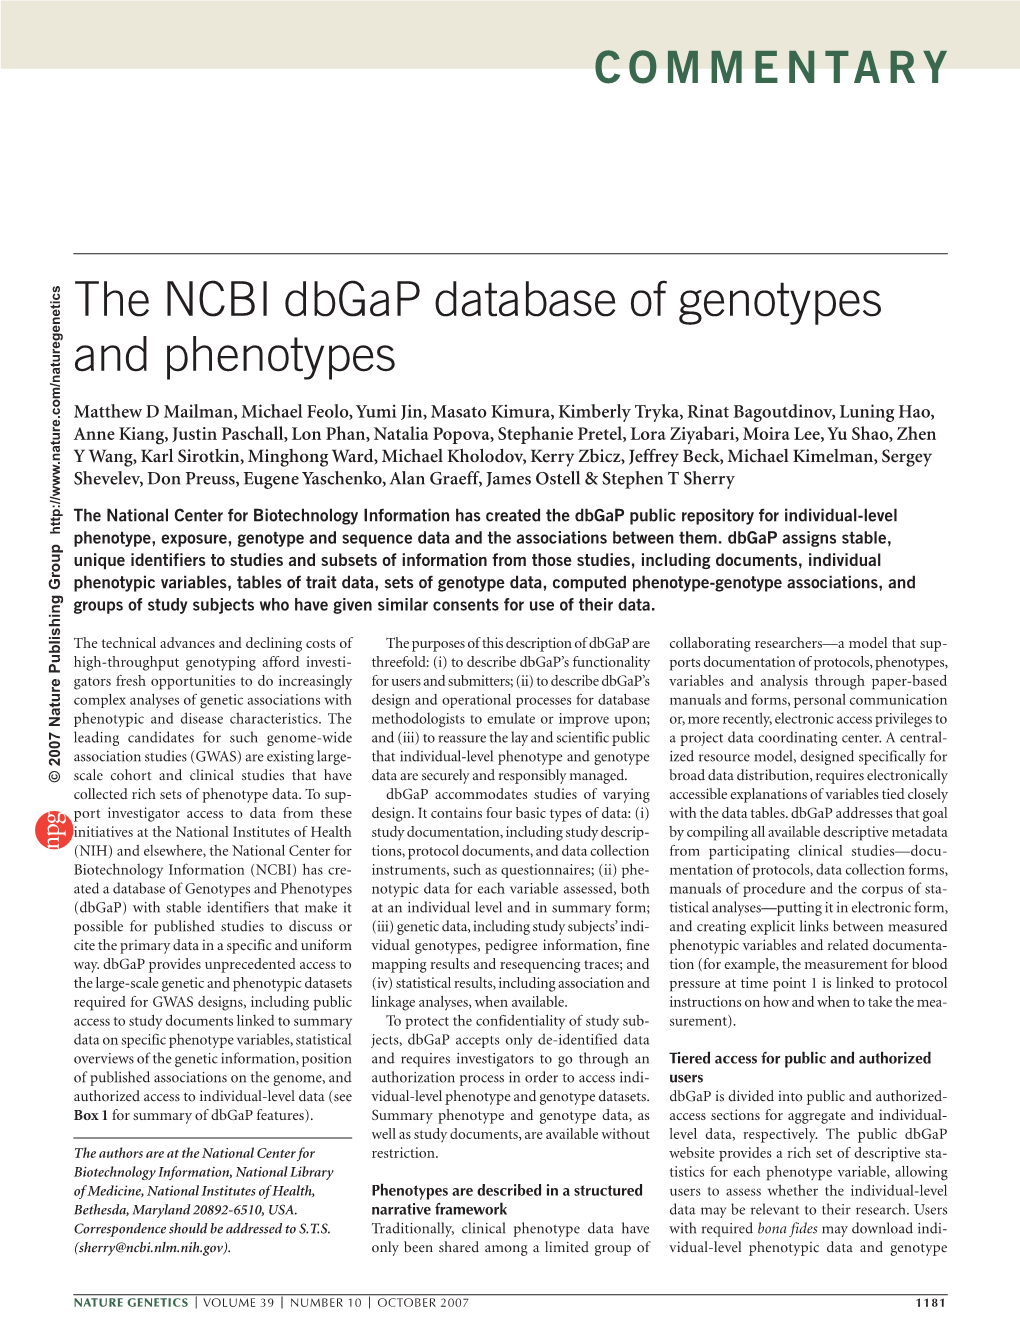 The NCBI Dbgap Database of Genotypes and Phenotypes